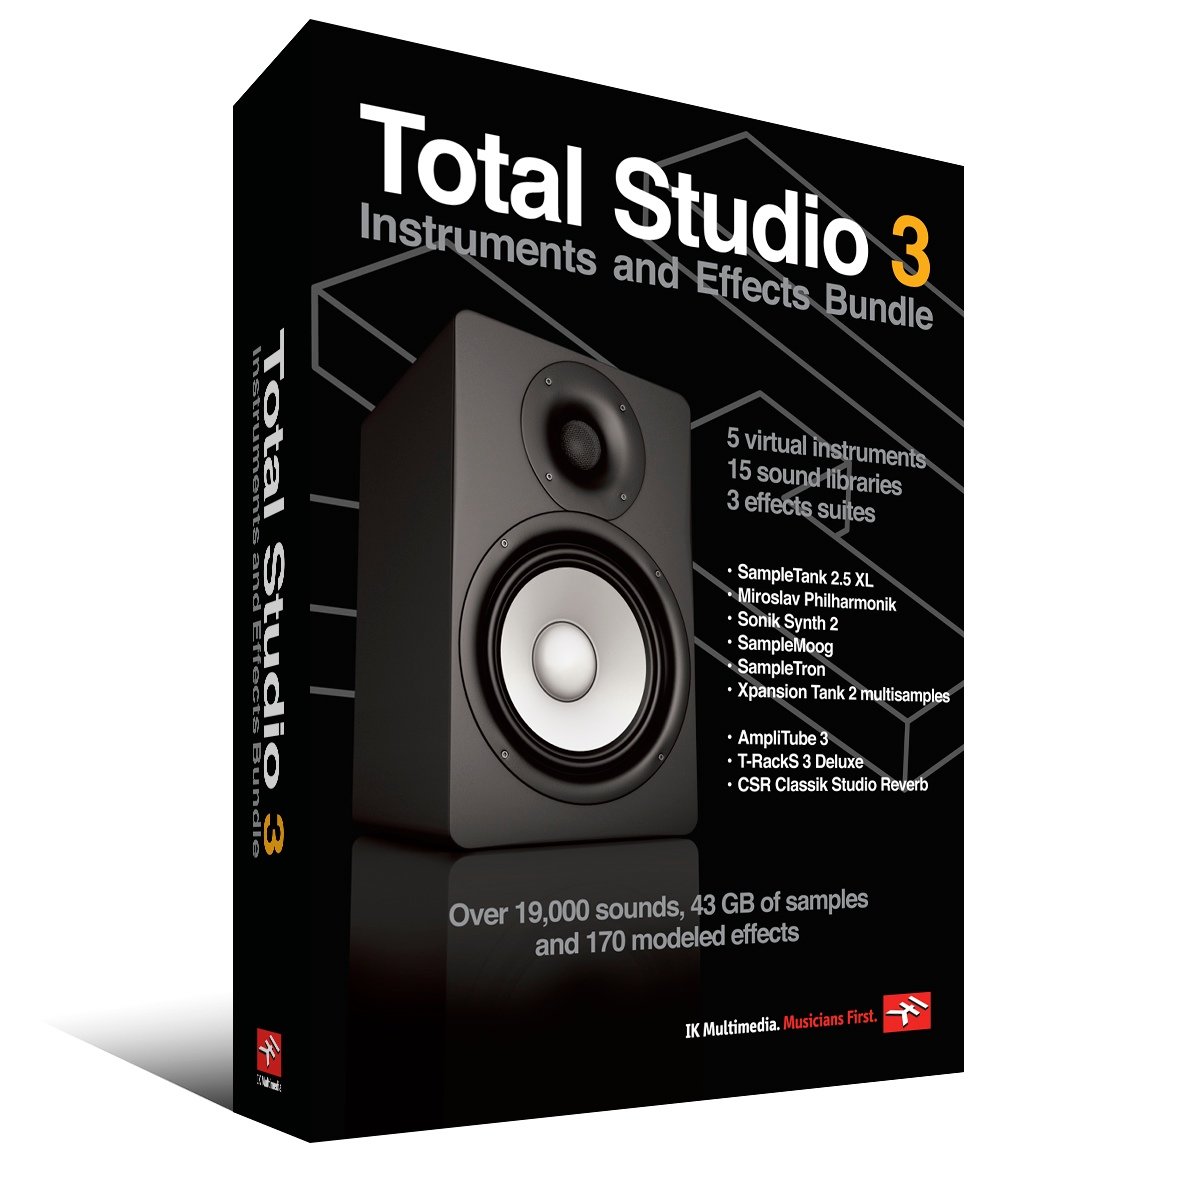 IK Multimedia Total Studio Bundle 3